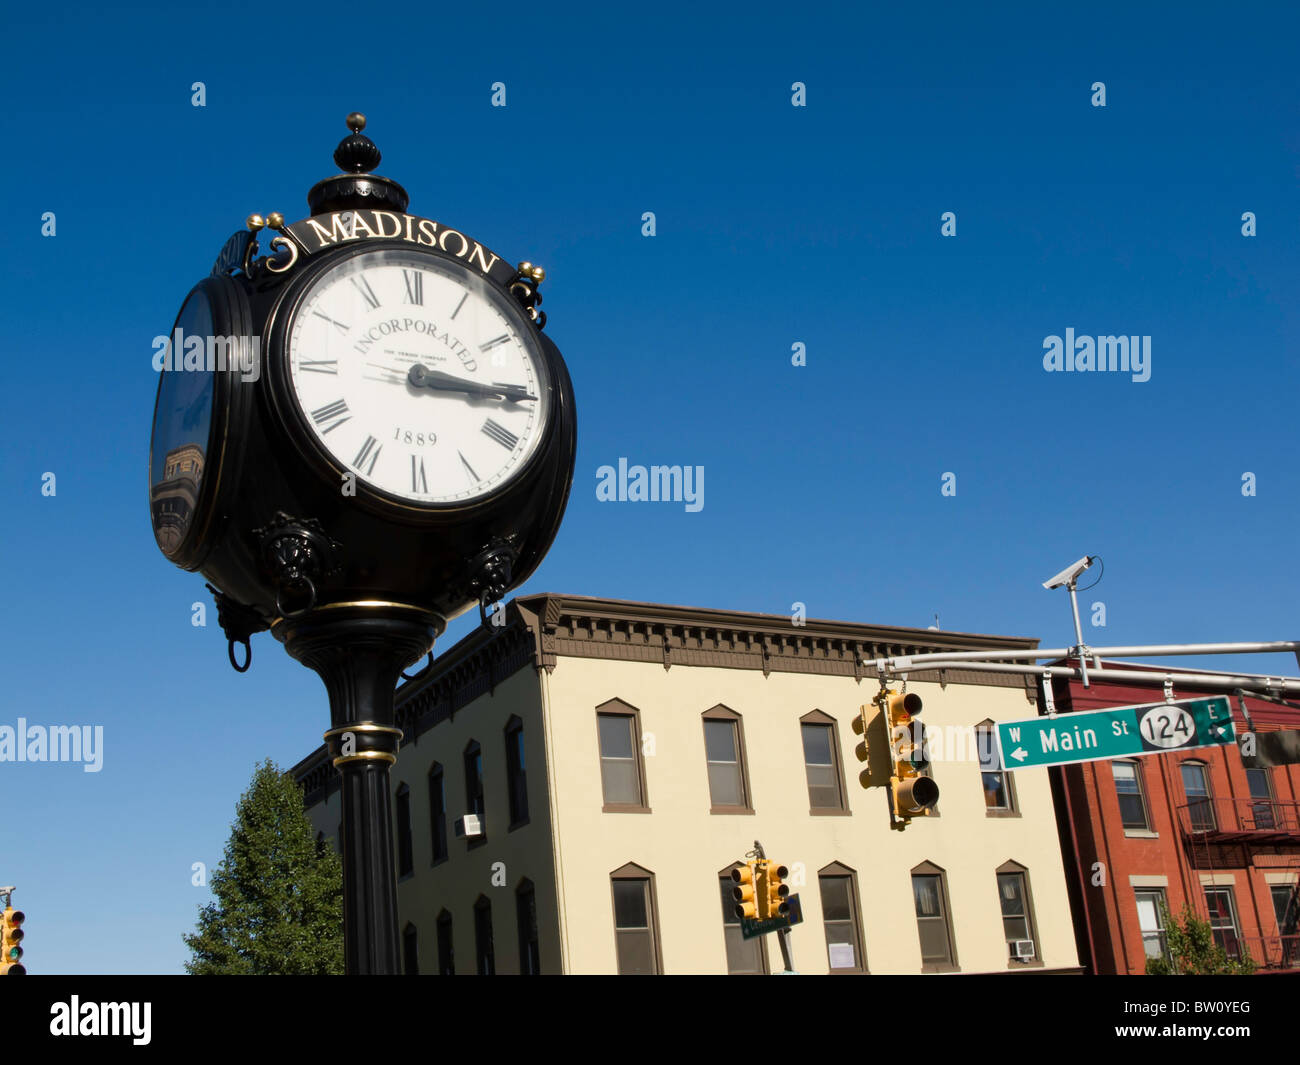 Town Square Clock, Main Street, Madison, NJ, USA Stock Photo